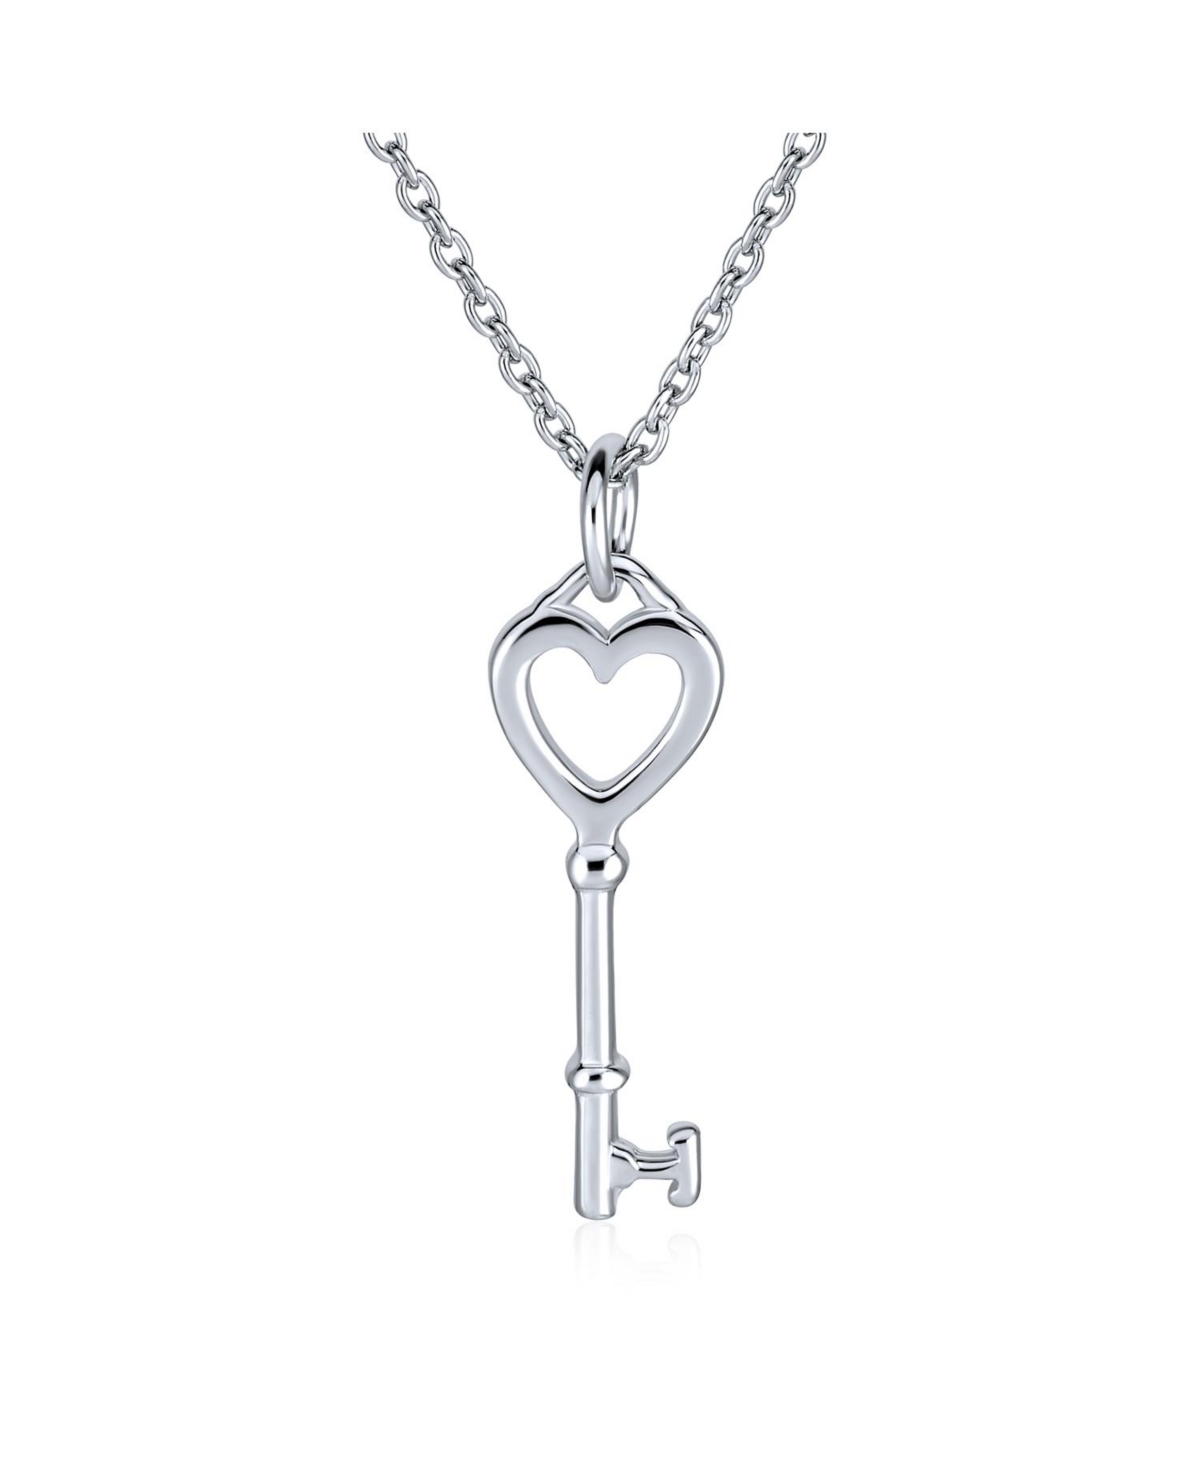 Simple Romantic Key to Your Heart Open Heart Key Necklace Pendant For Women Teens Girlfriend .925 Sterling Silver - Grey